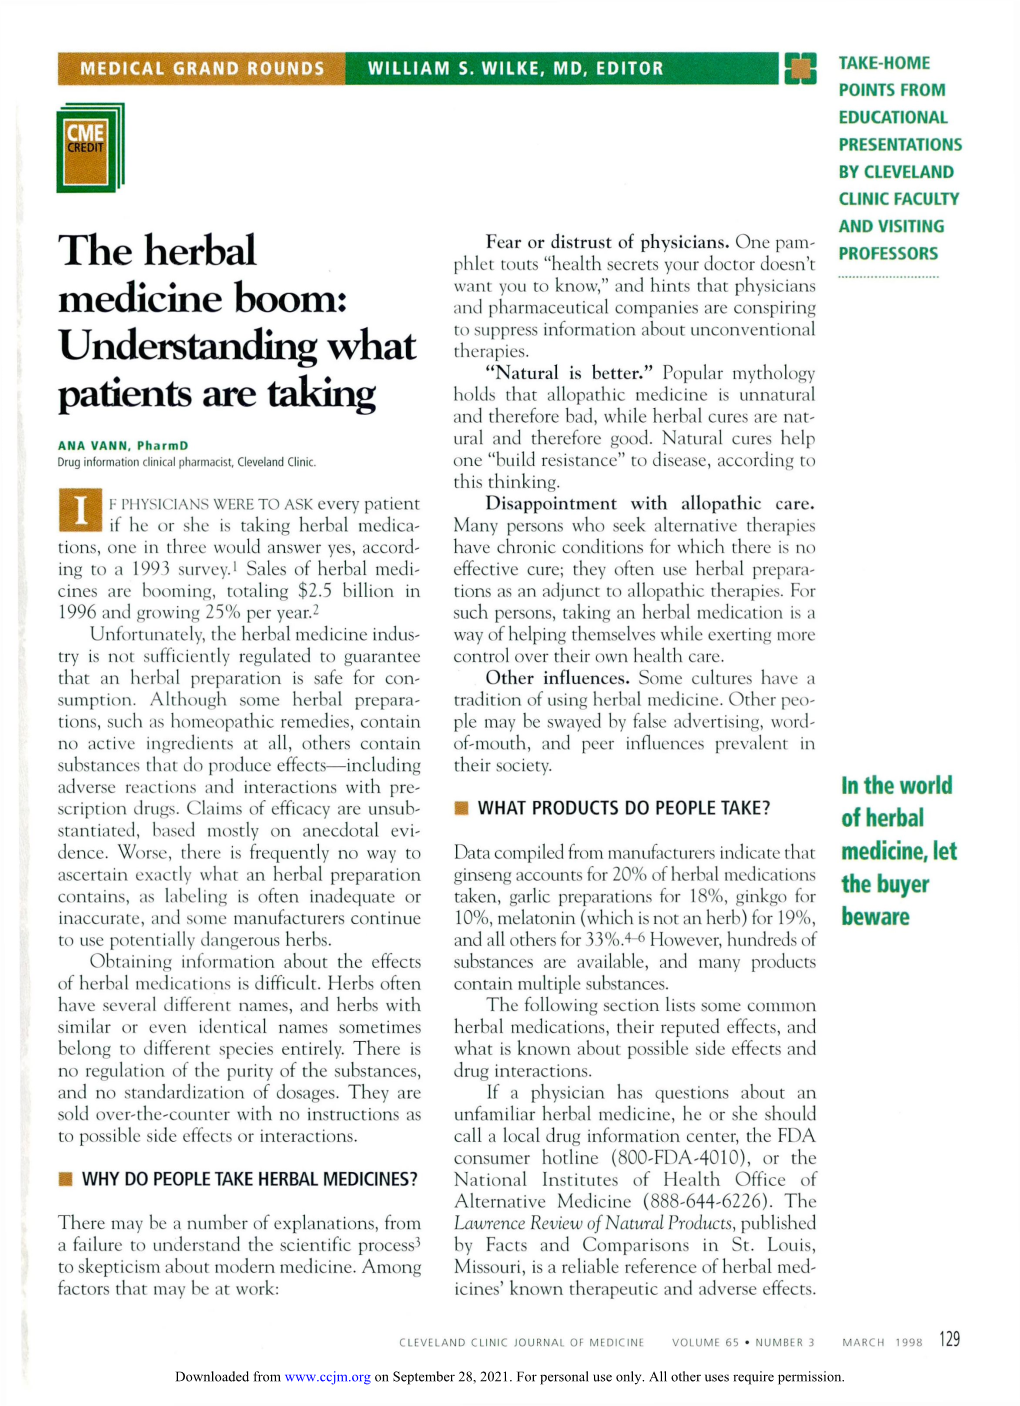 The Herbal Medicine Boom